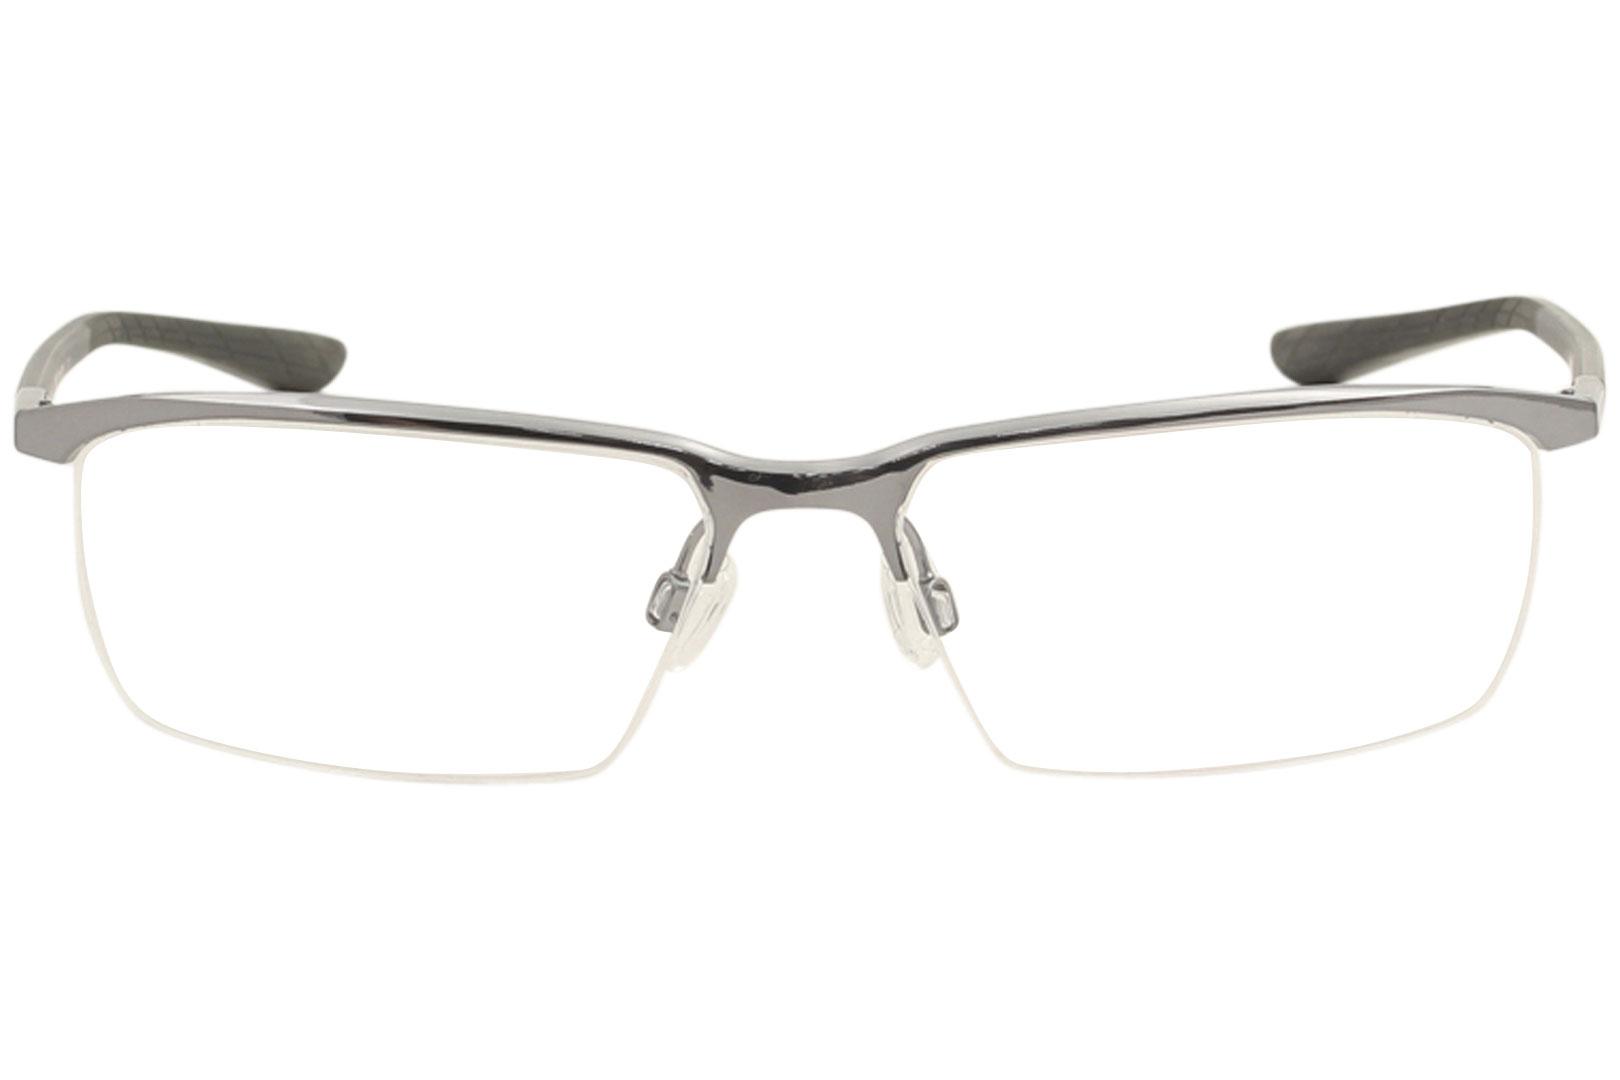 Men's Eyeglasses Half Rim Titanium Optical Frame | EyeSpecs.com